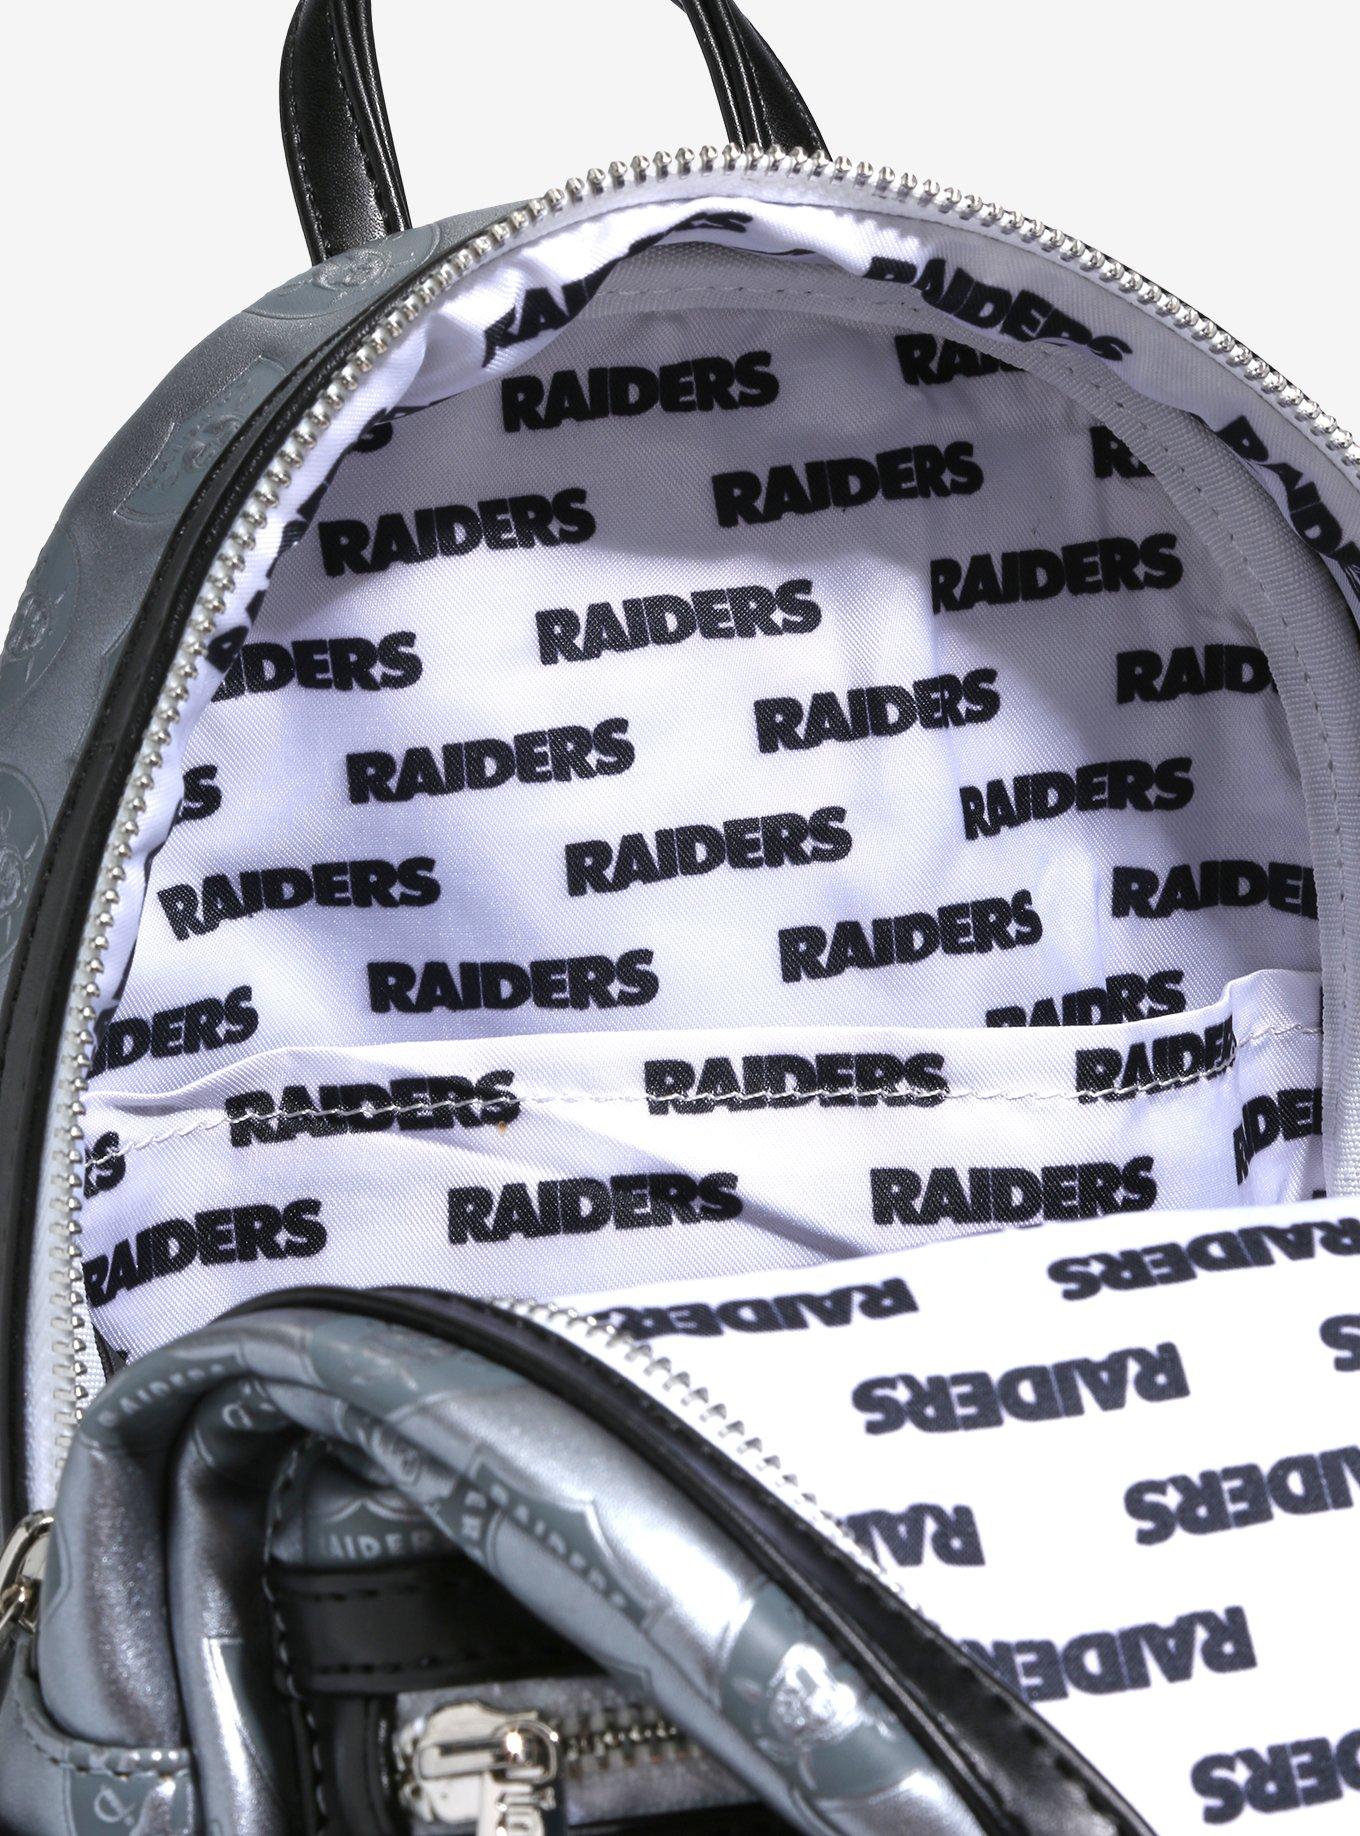 NFL Las Vegas Raiders Patches Mini Backpack